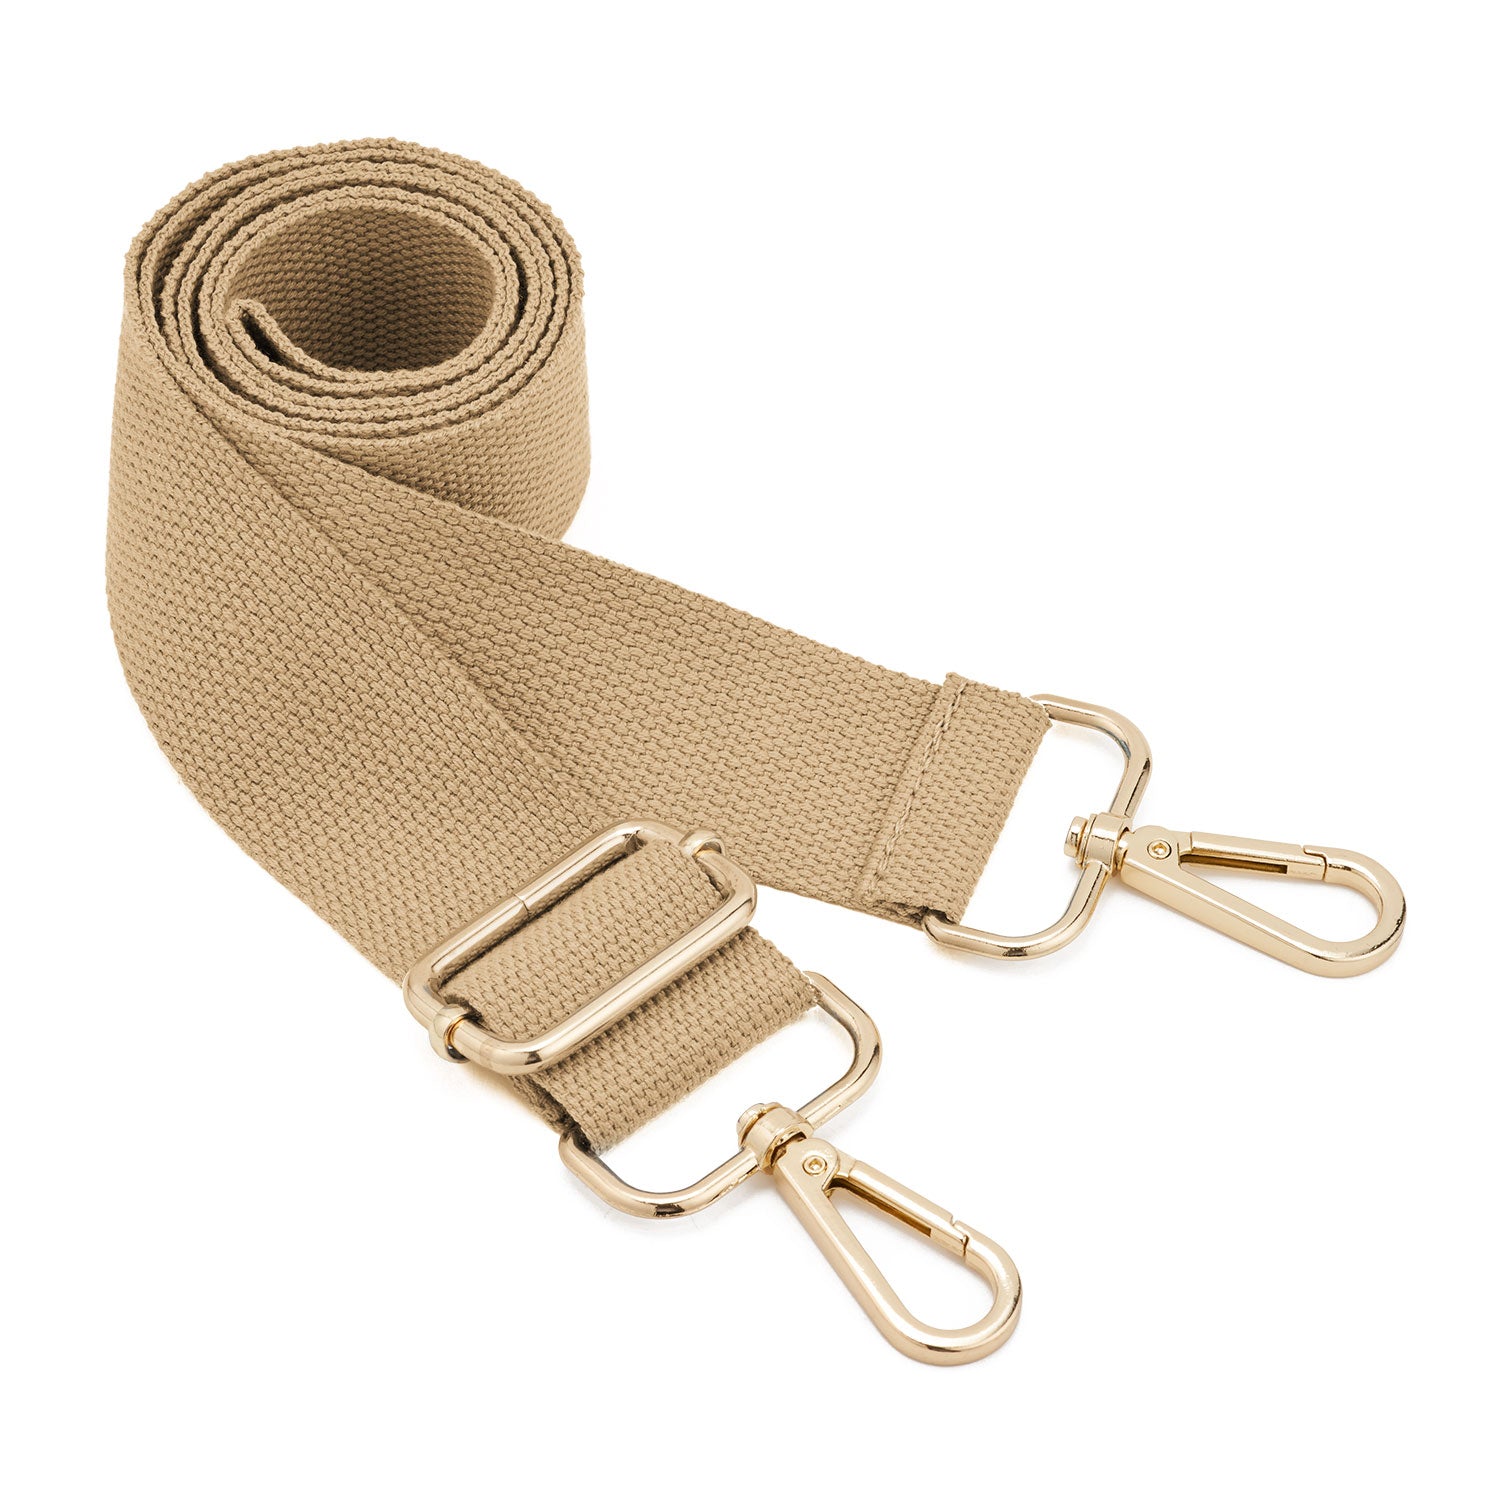  Crossbody Purse Straps Replacement Handbag Strap Adjustable  Canvas Purse Belt 2 Wide Shoulder Straps : Arts, Crafts & Sewing